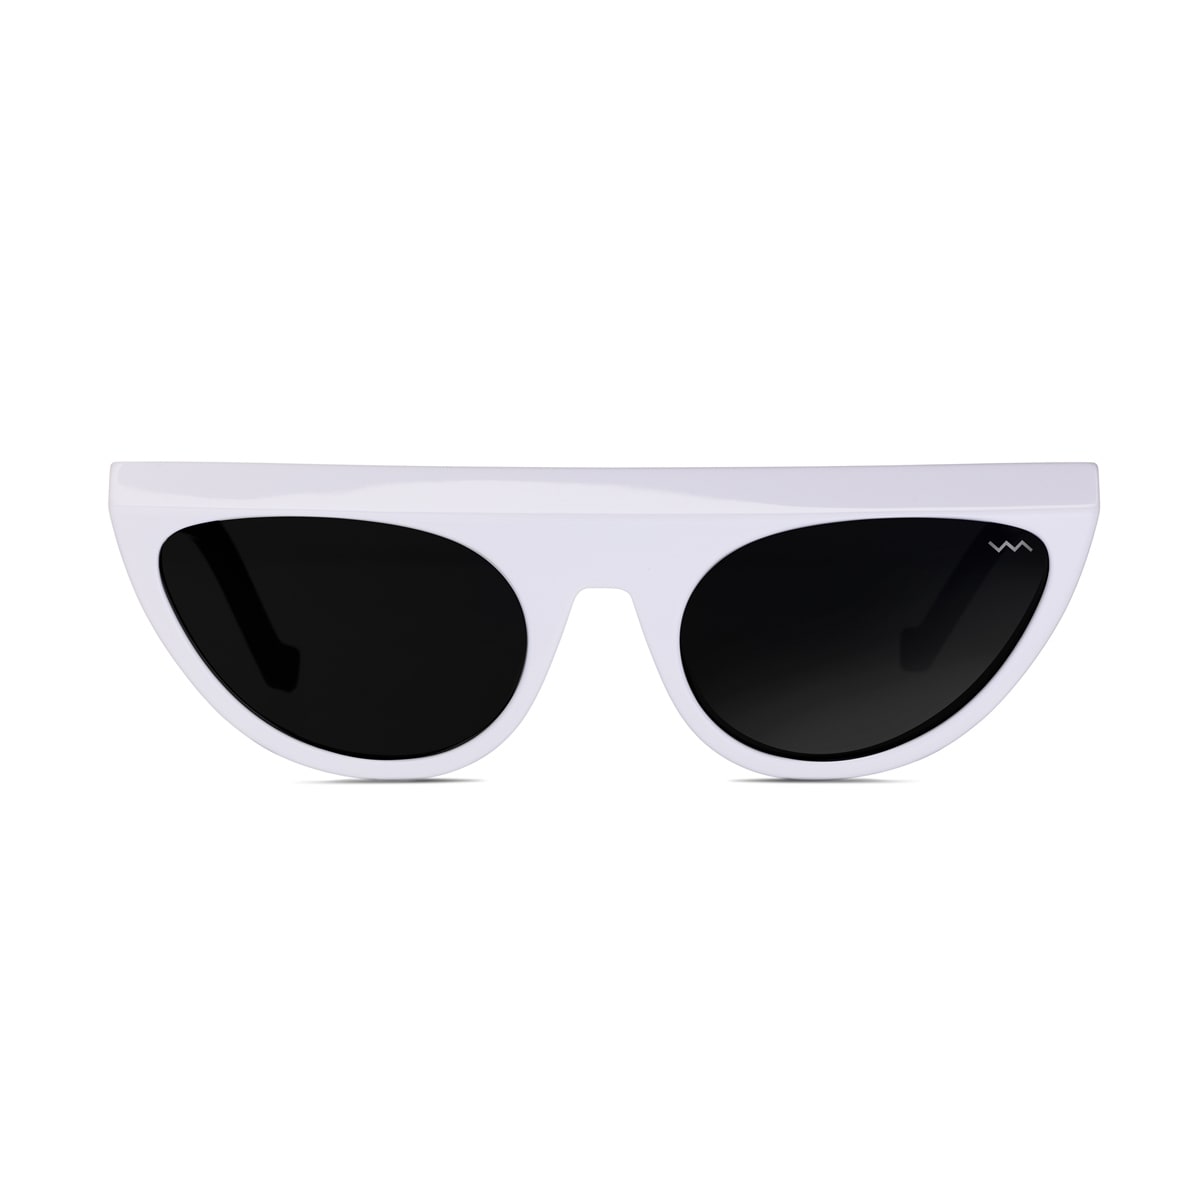 Bl0027 Black Label White Sunglasses